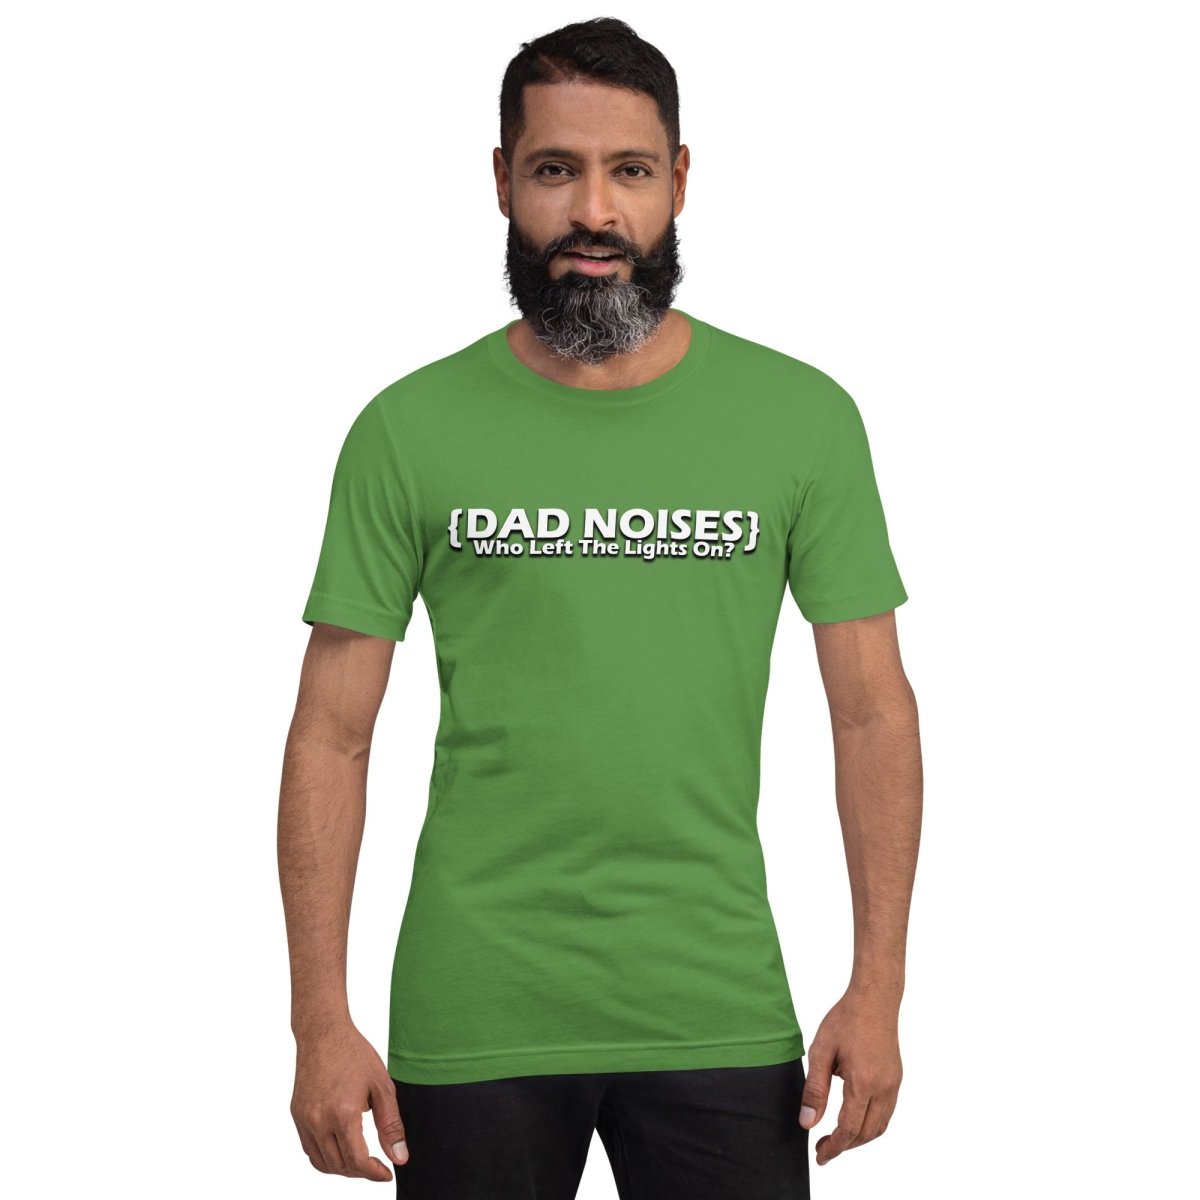 Dad Noises- Dadisms - Who Left The Lights On? Unisex t-shirt - The Dude Abides - T-shirt - Birthday - Birthday Gift - boyfriend